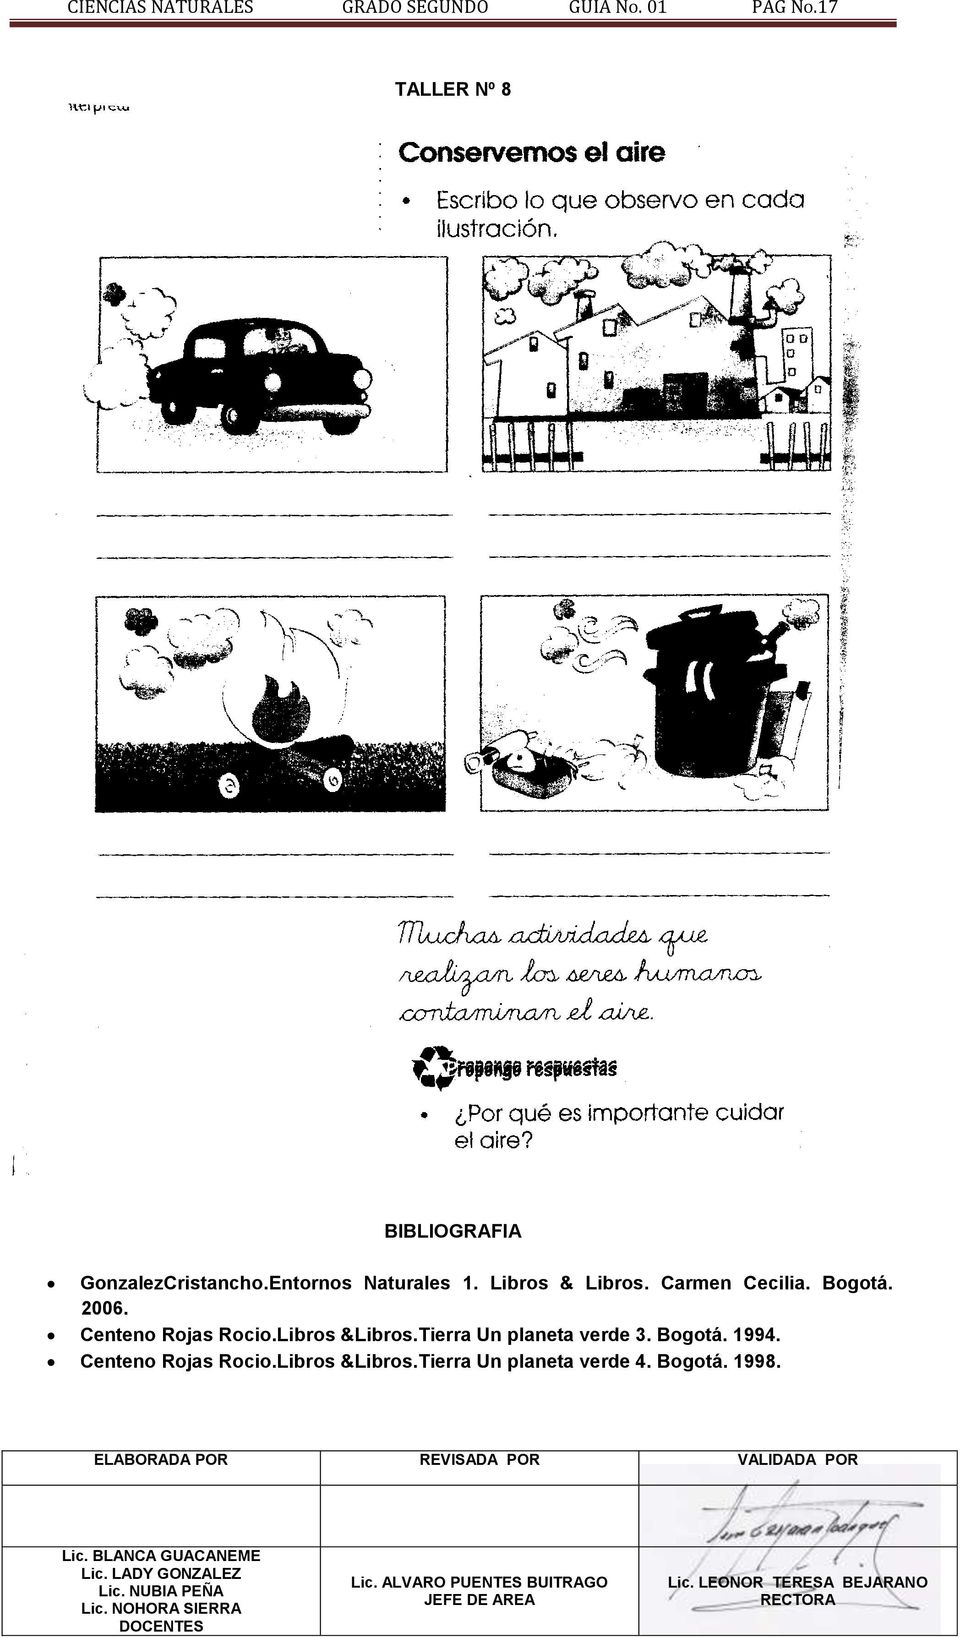 Centeno Rojas Rocio.Libros &Libros.Tierra Un planeta verde 4. Bogotá. 1998. ELABORADA POR REVISADA POR VALIDADA POR Lic.